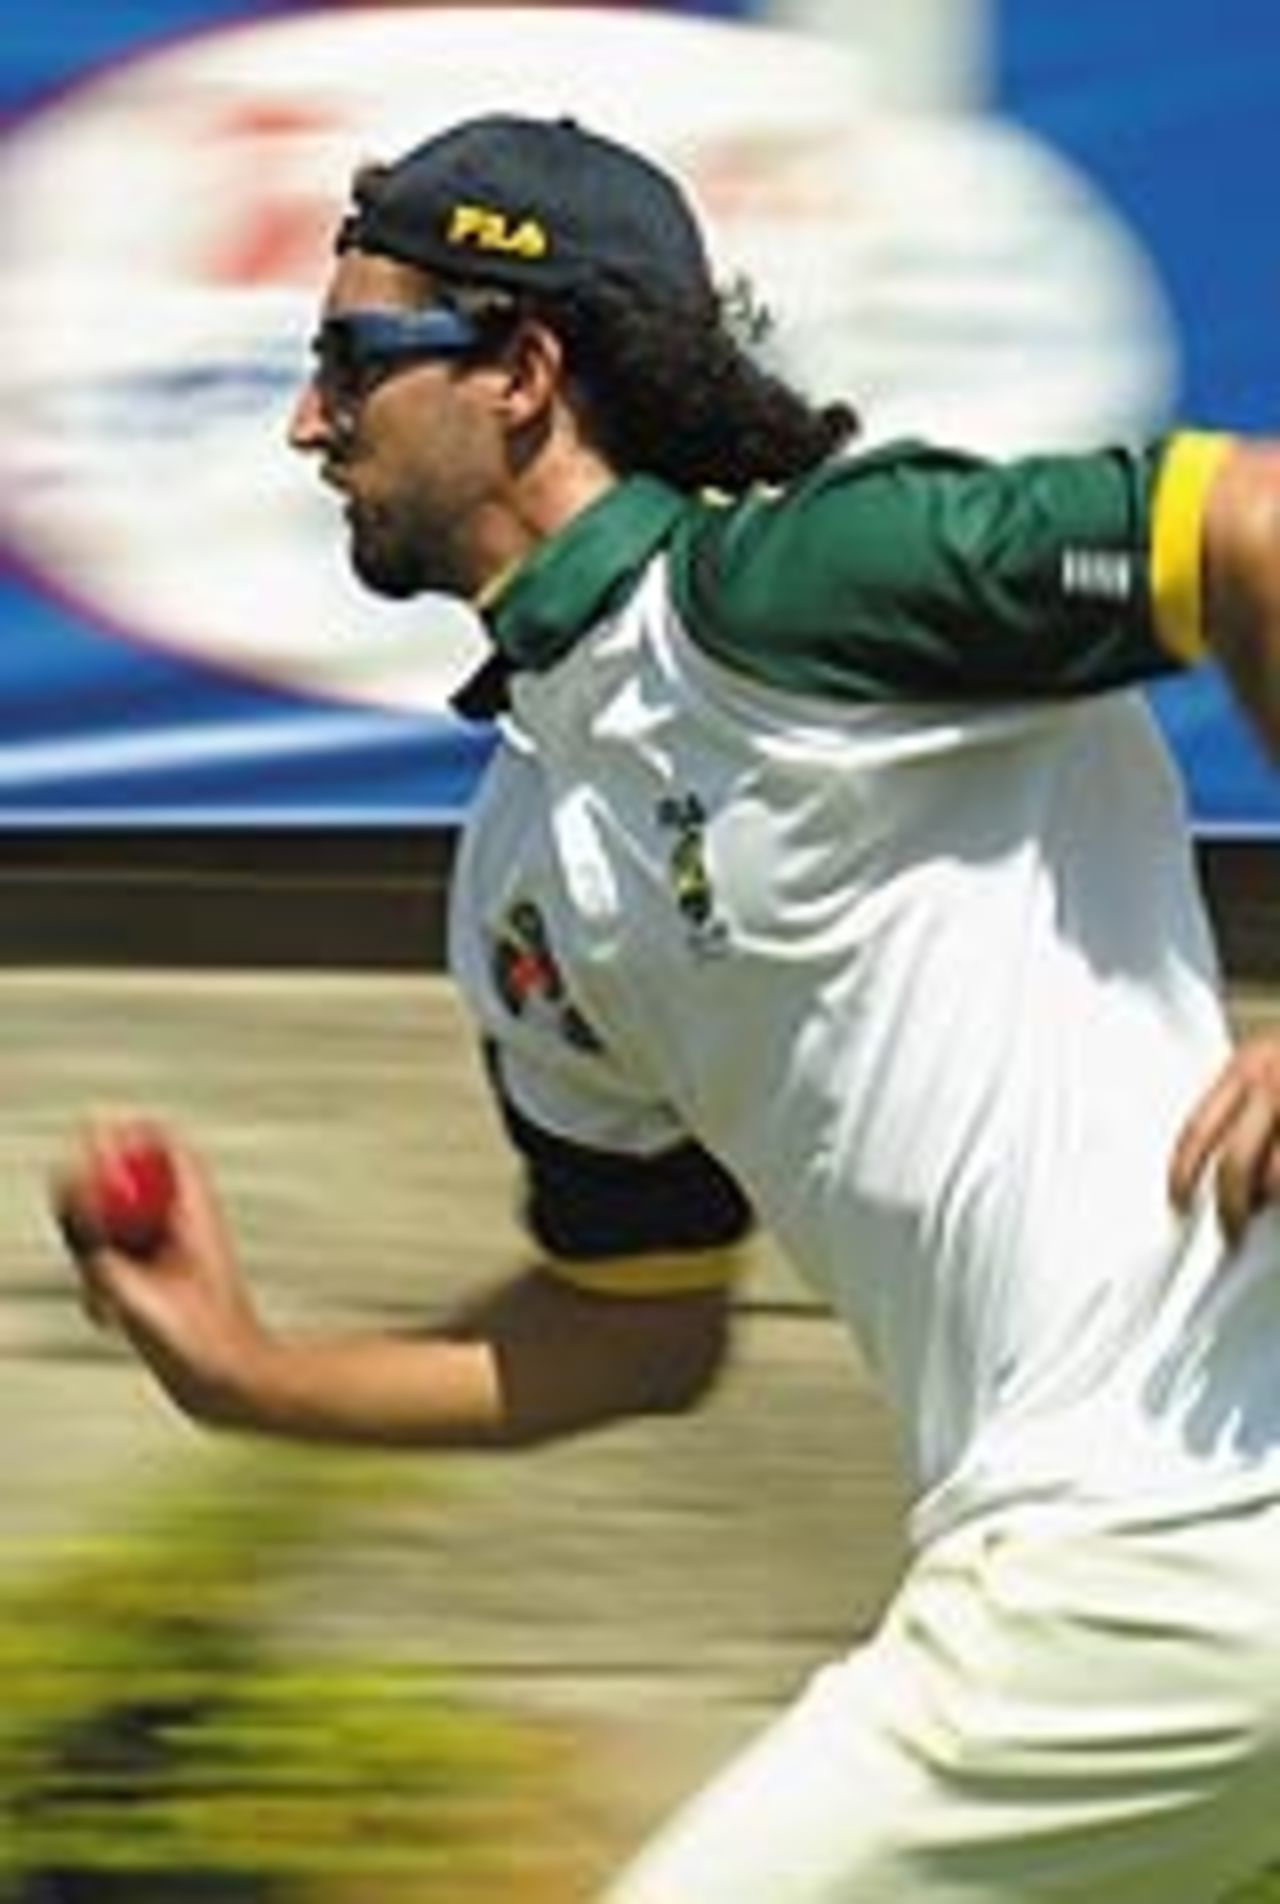 Jason Gillispie of Australia in action during bowling practice, Australia v India, 4th Test, Sydney